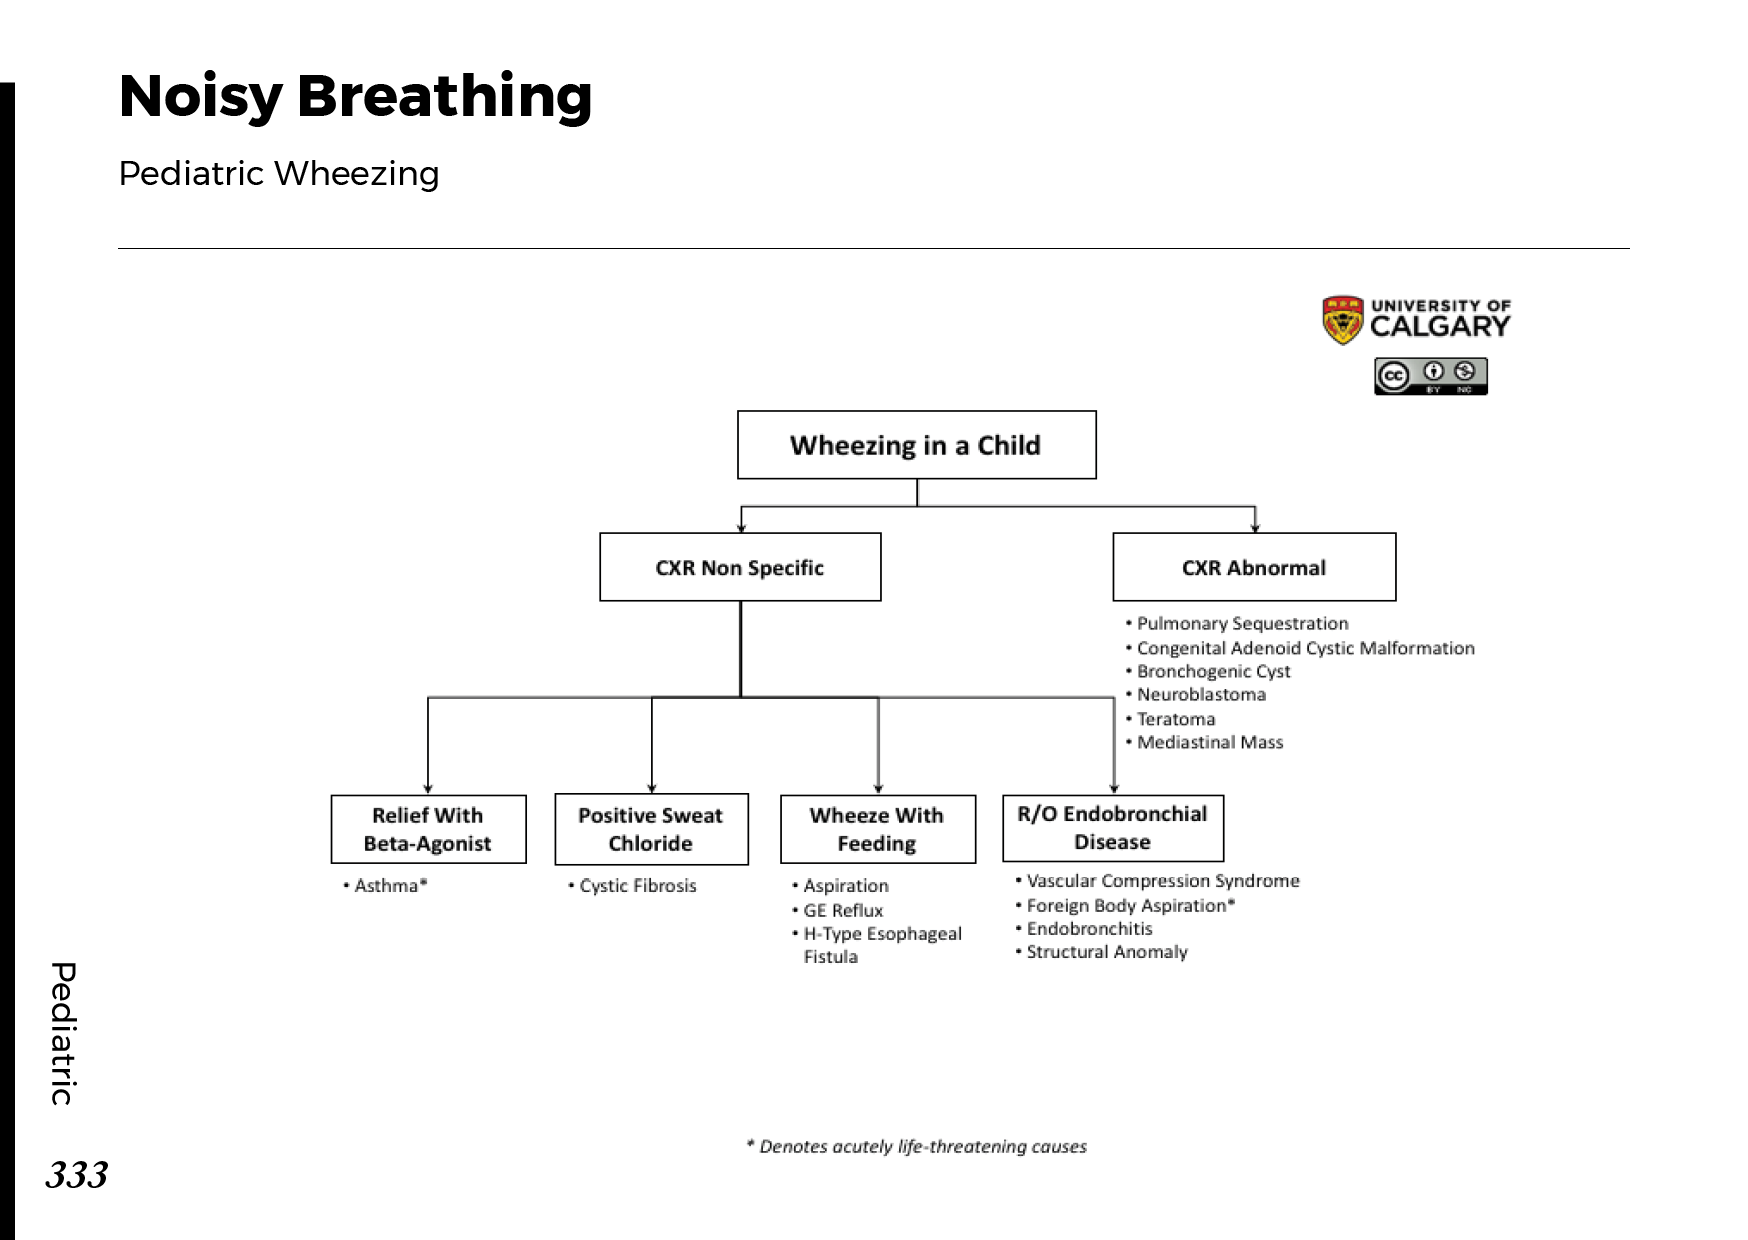 NOISY BREATHING: Pediatric Wheezing Scheme